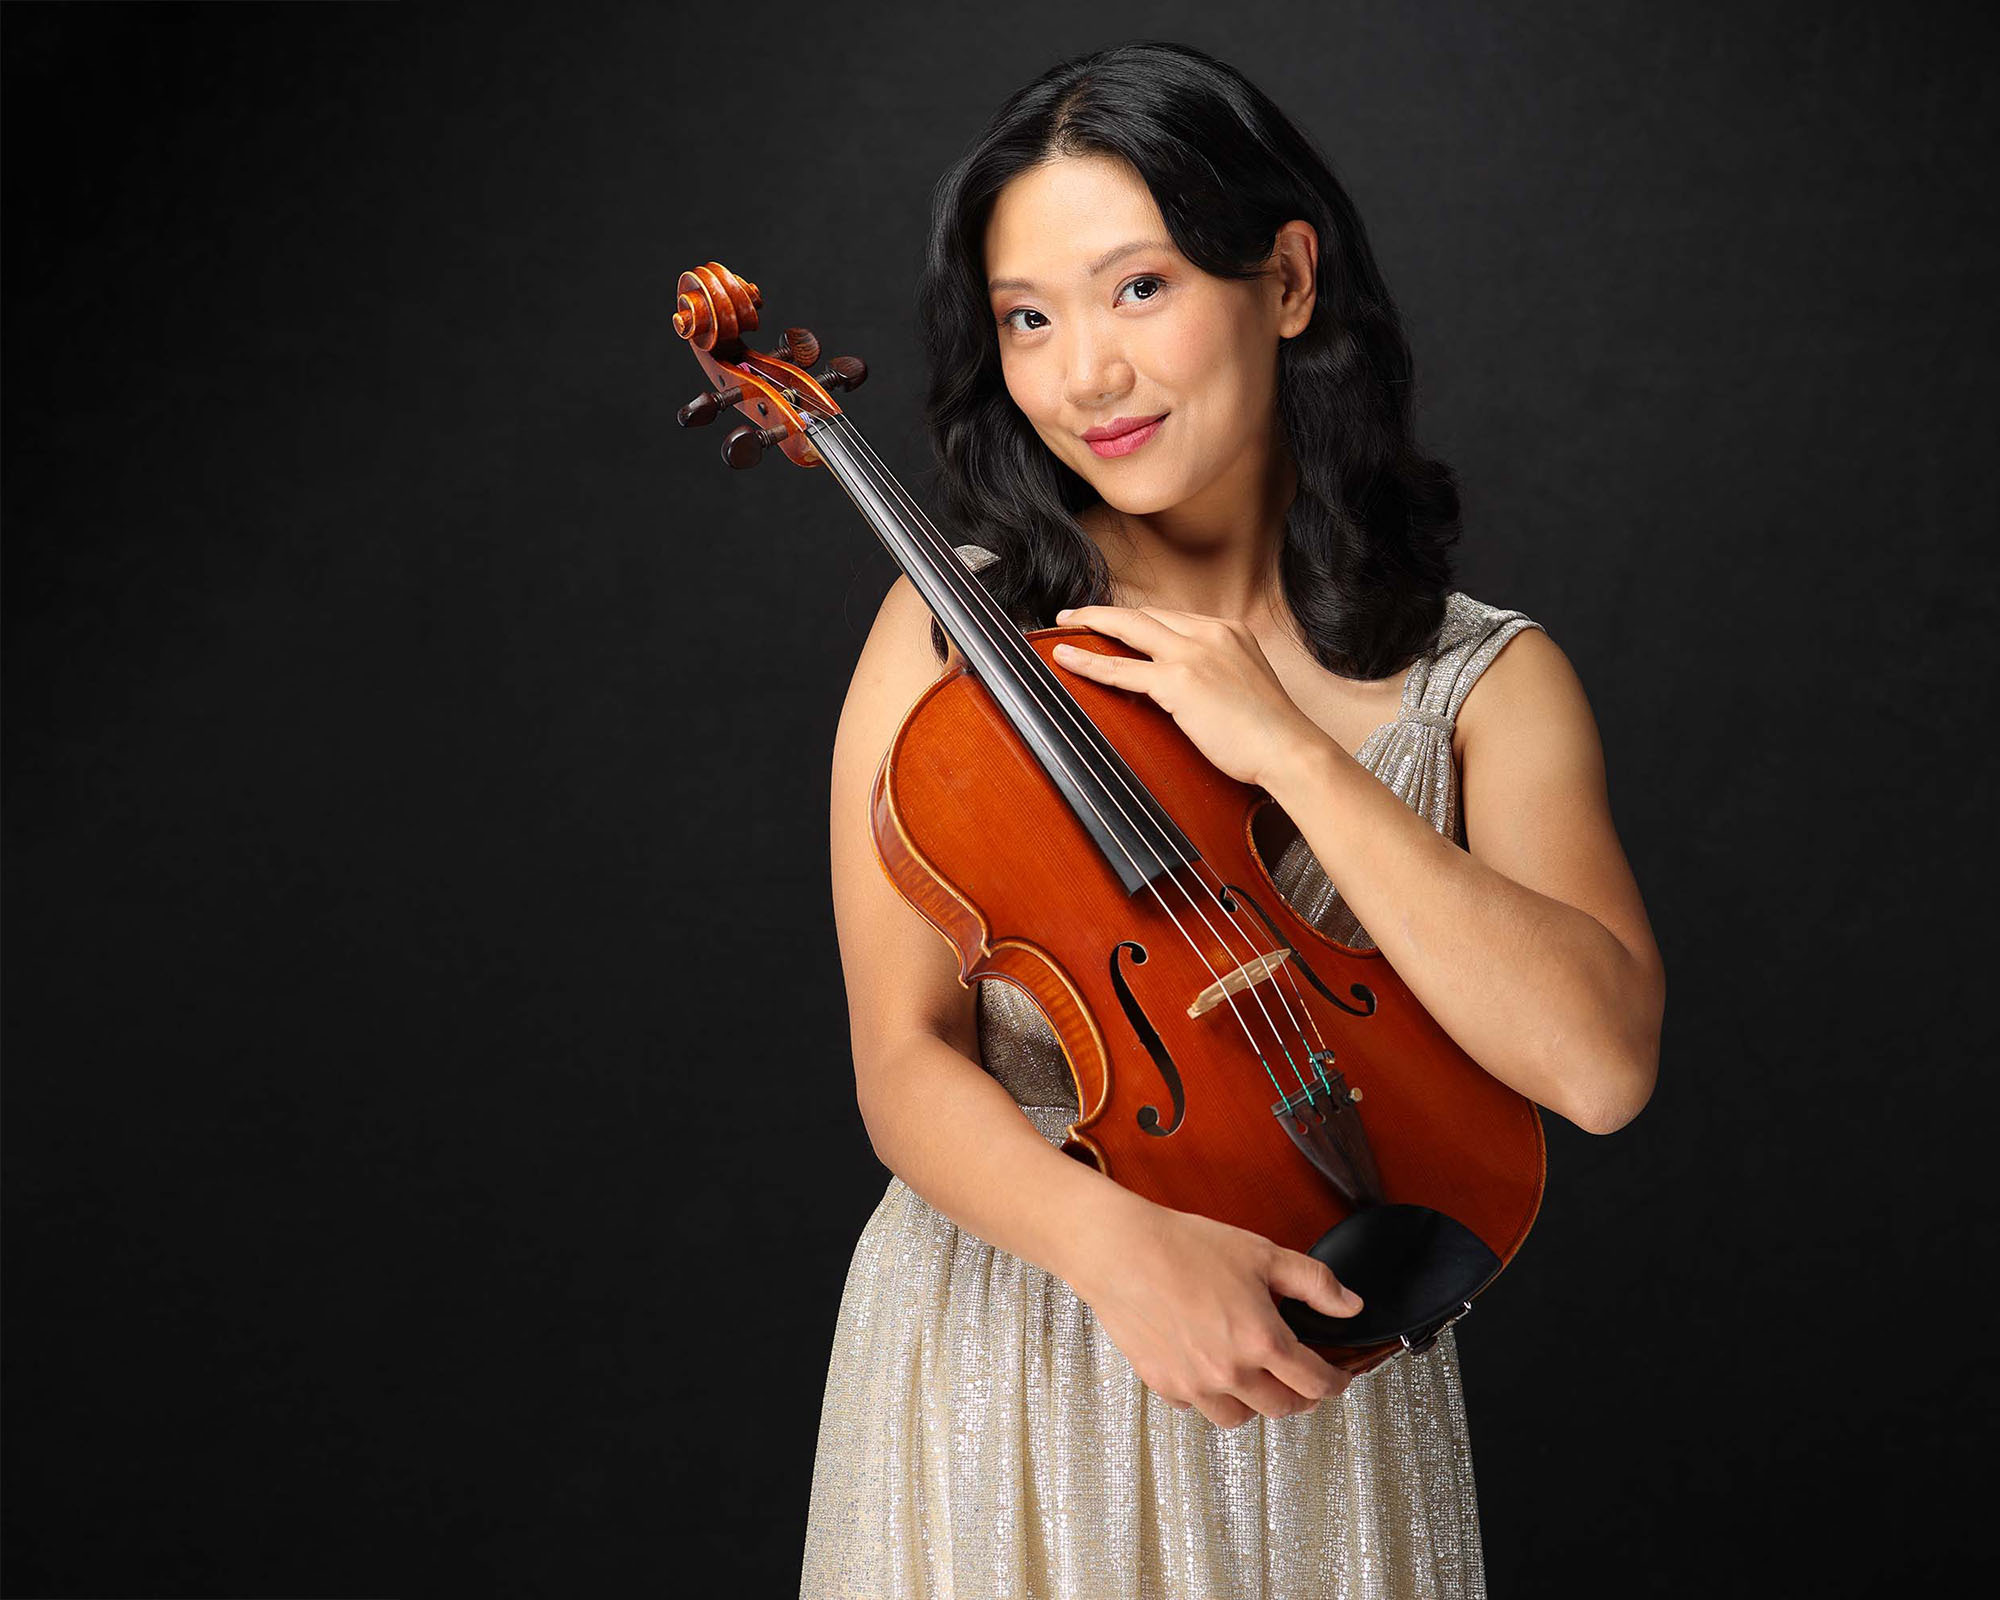 suyeon lee 0637 viola violin player musician portrait with instrument